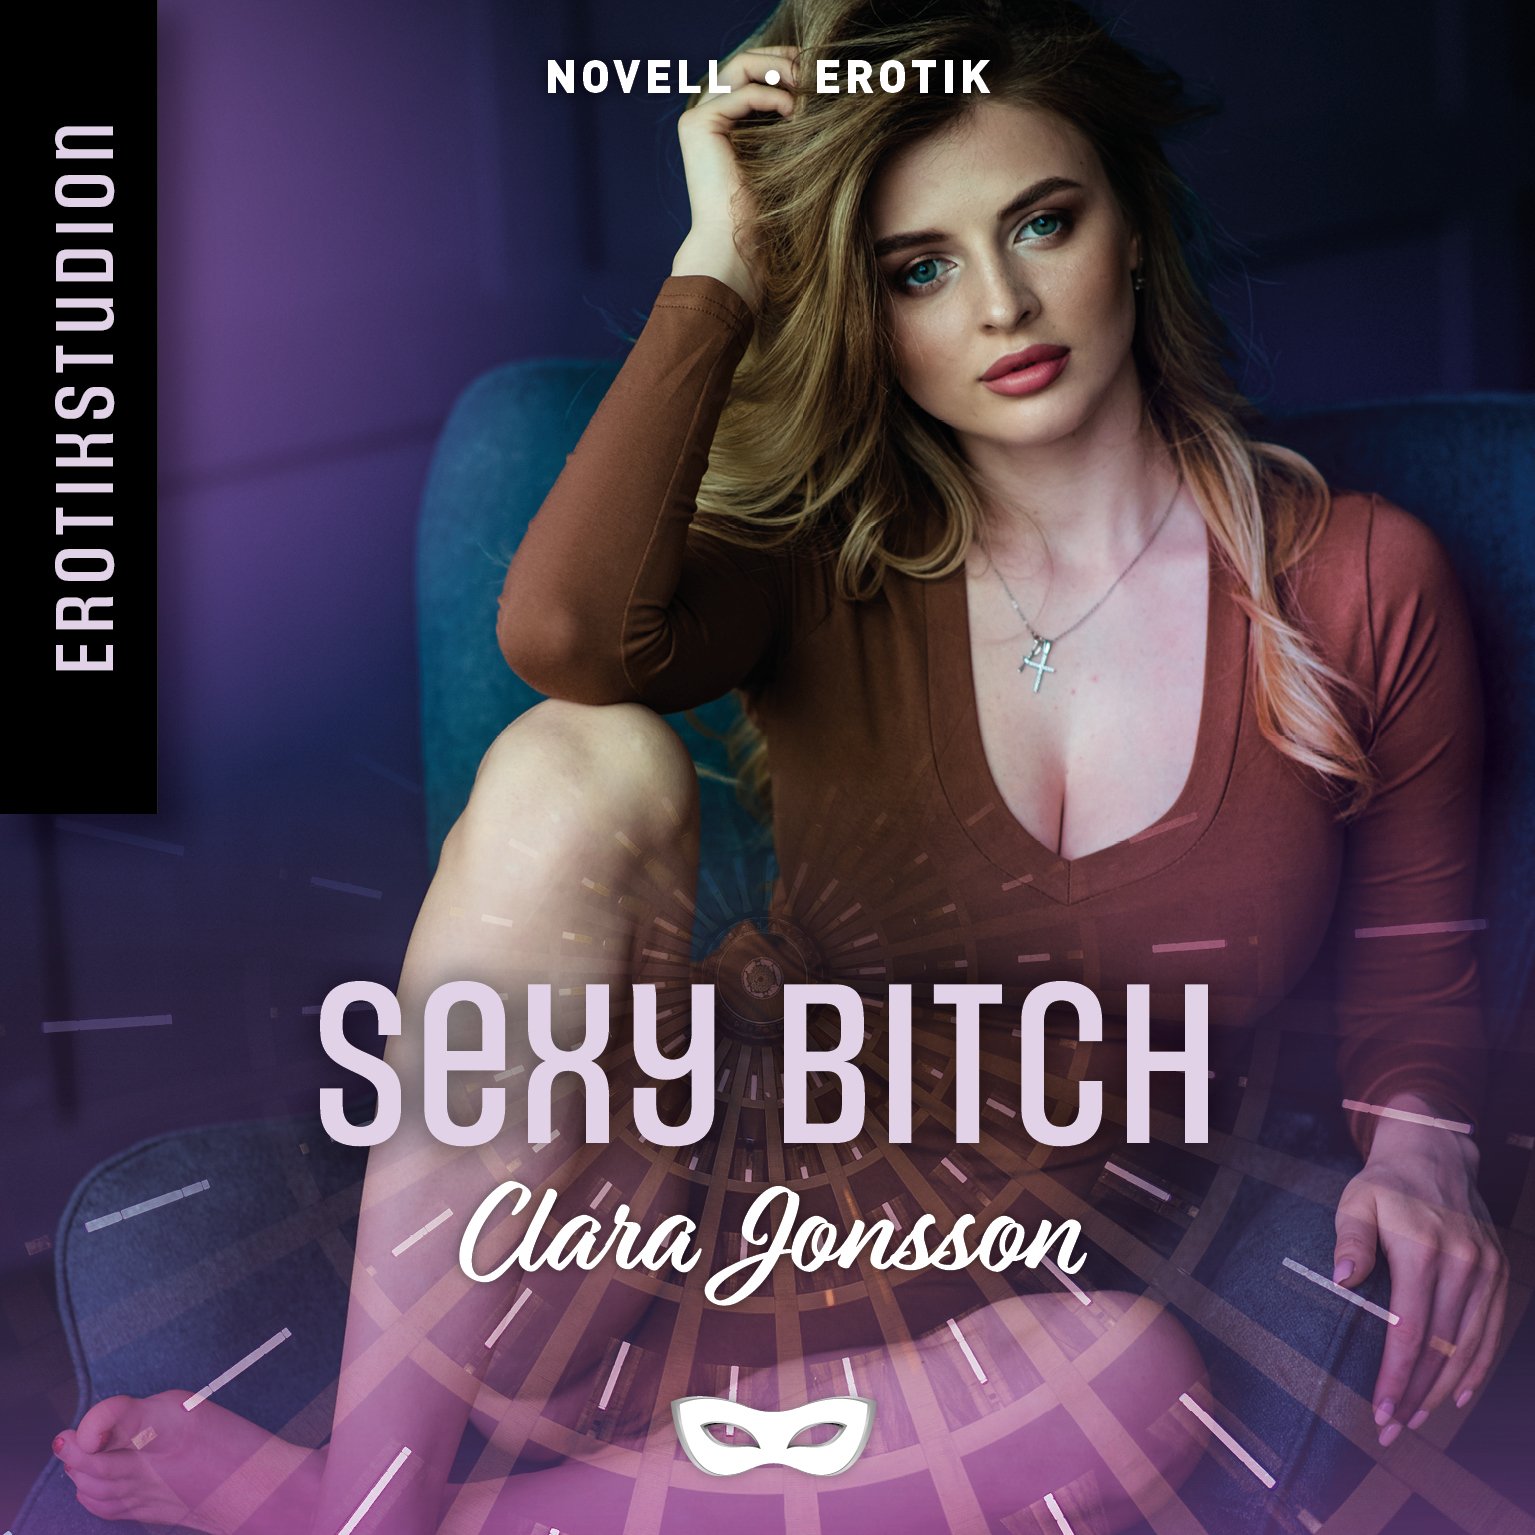 EROTIK5 Clara Jonsson Sexy bitch omslag audio.jpg